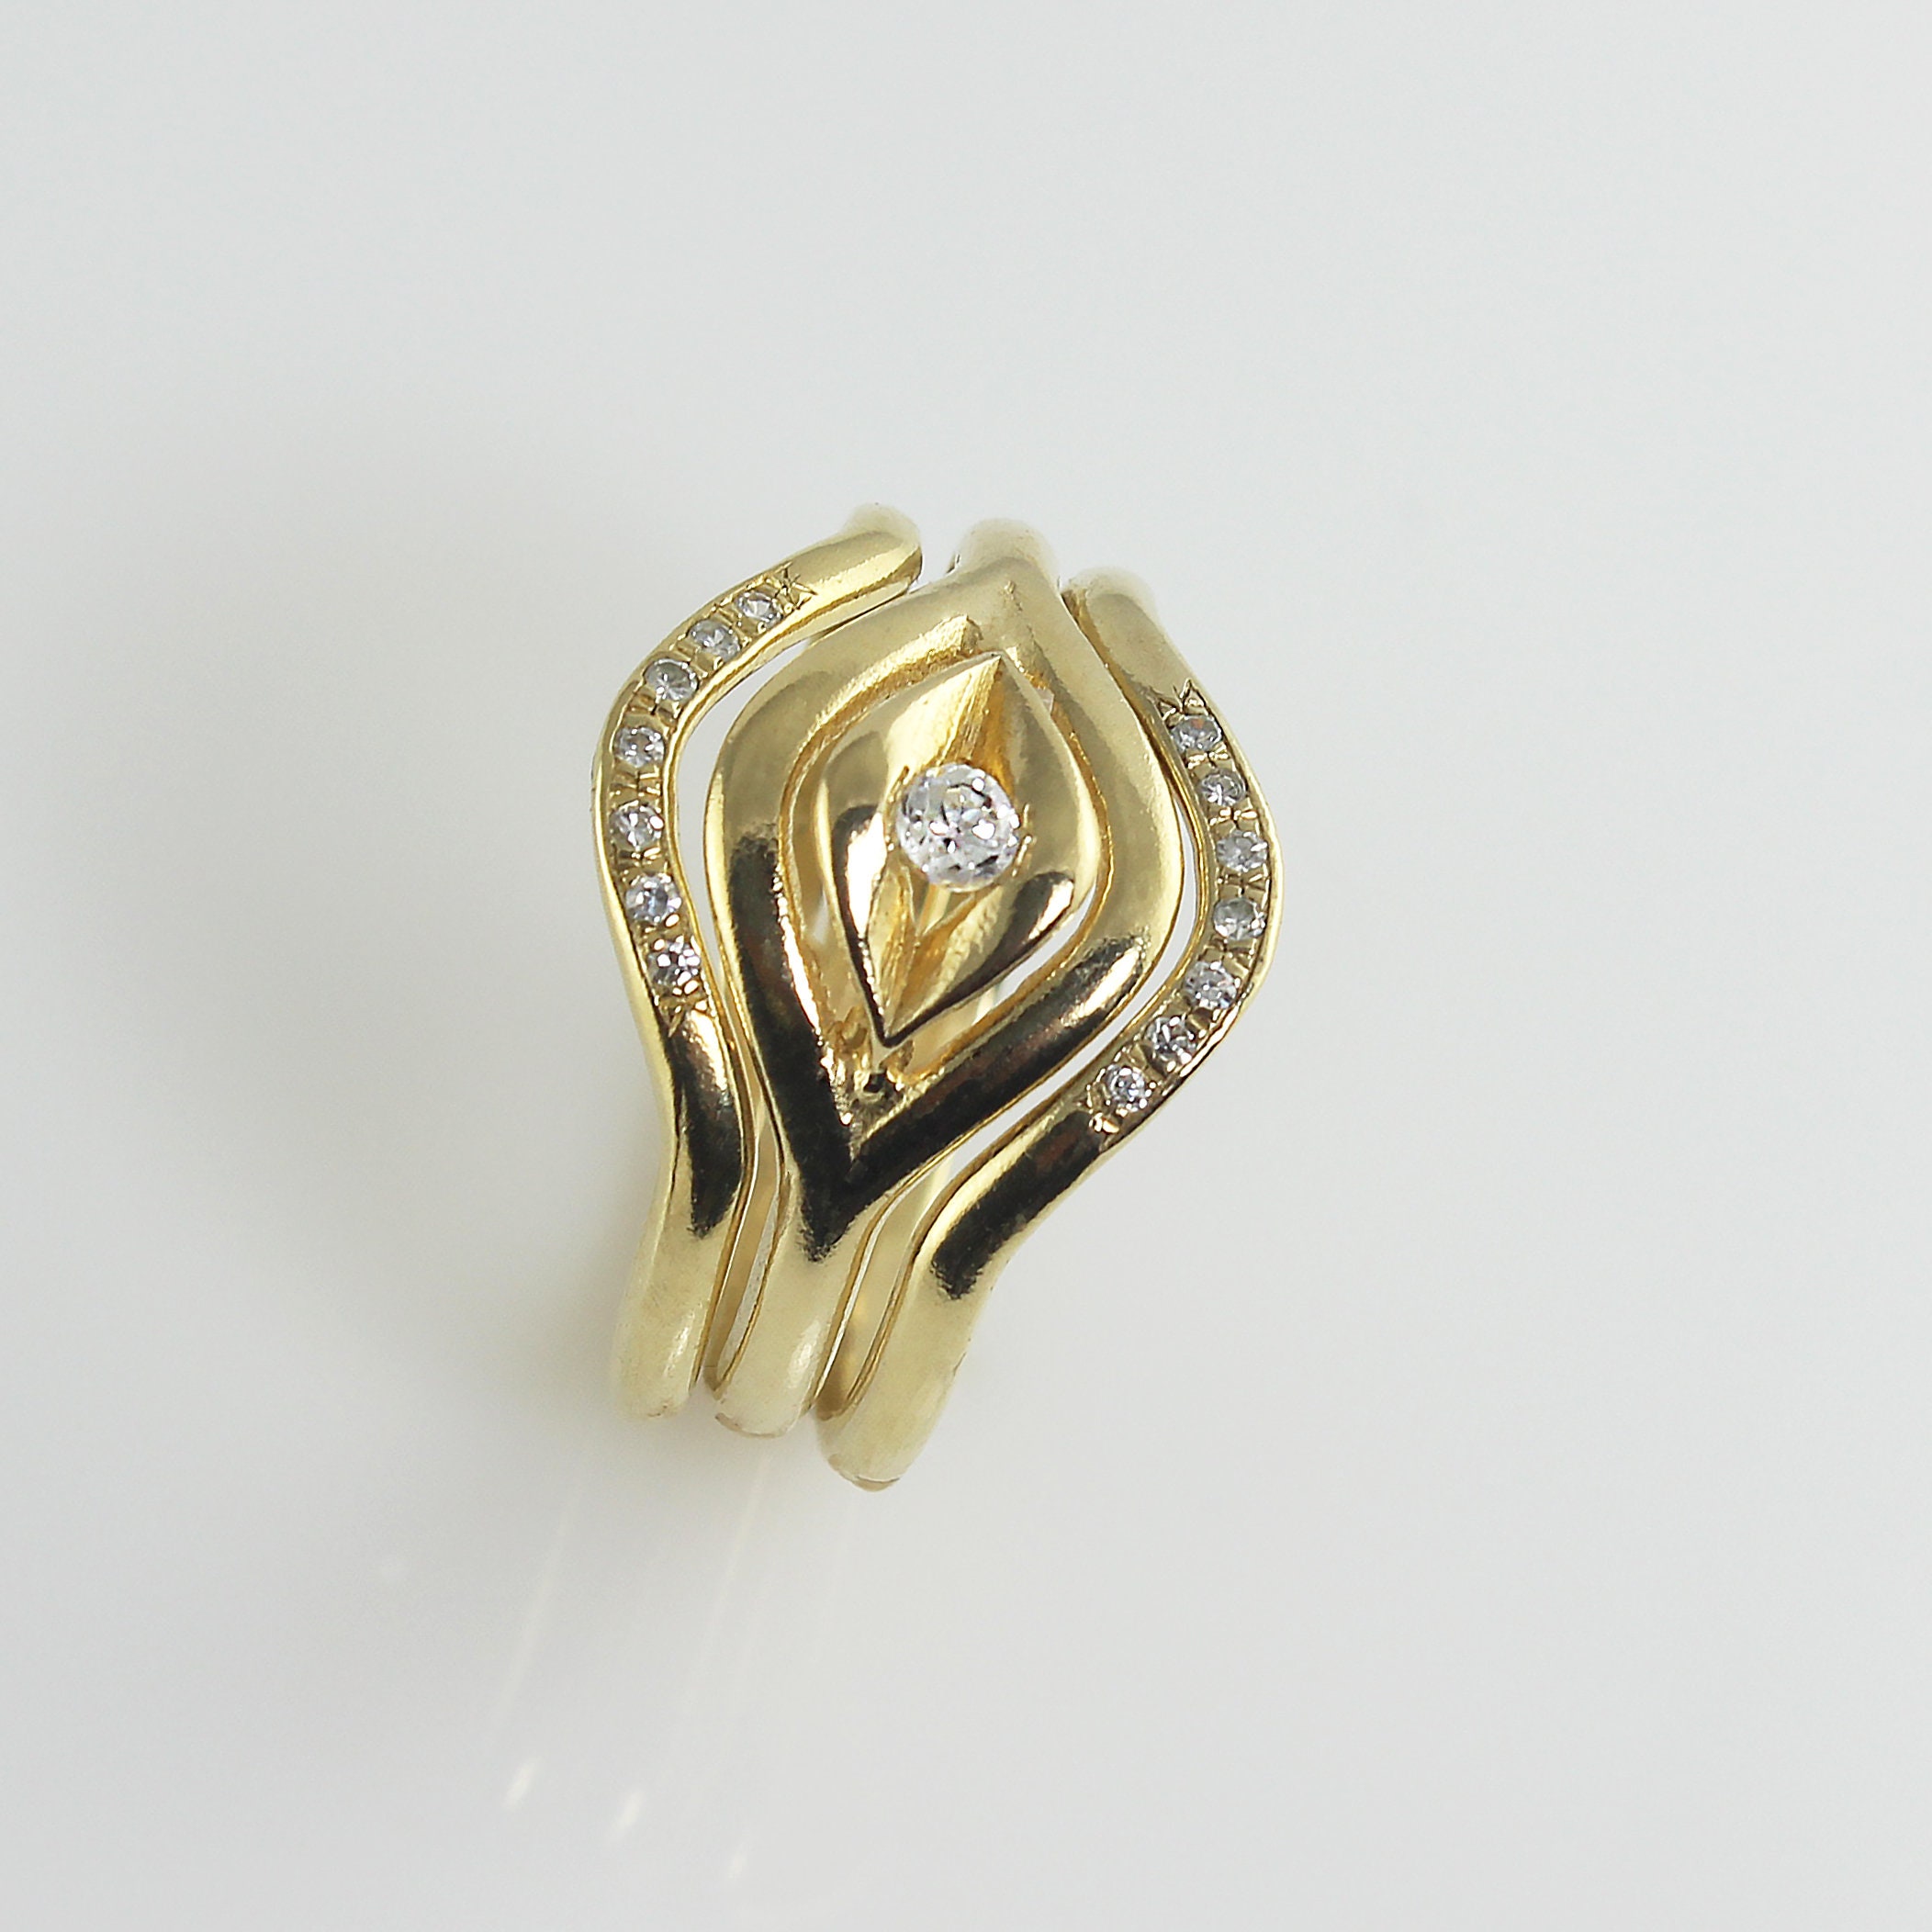 Three Gold Wedding Rings Diamond Rings Set Of Gold Rings | Etsy